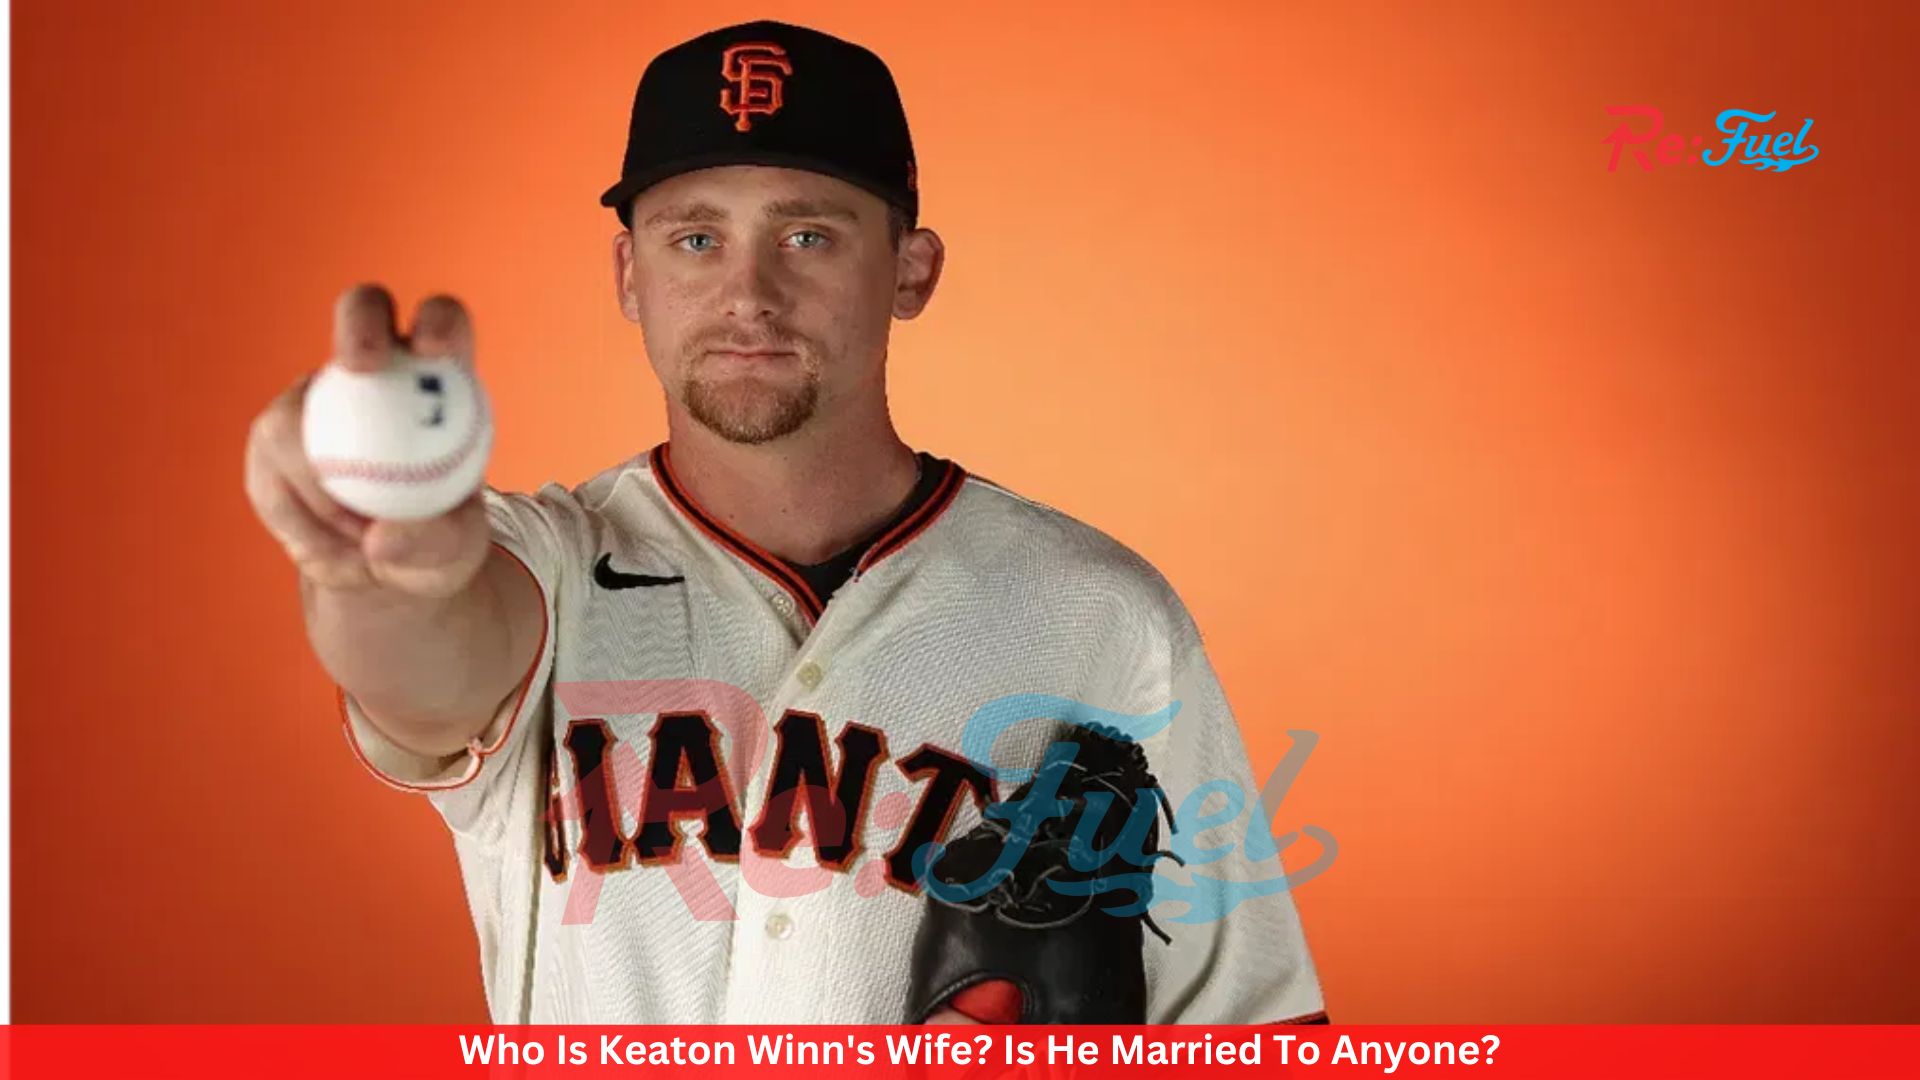 Who Is Keaton Winn's Wife? Is He Married To Anyone?